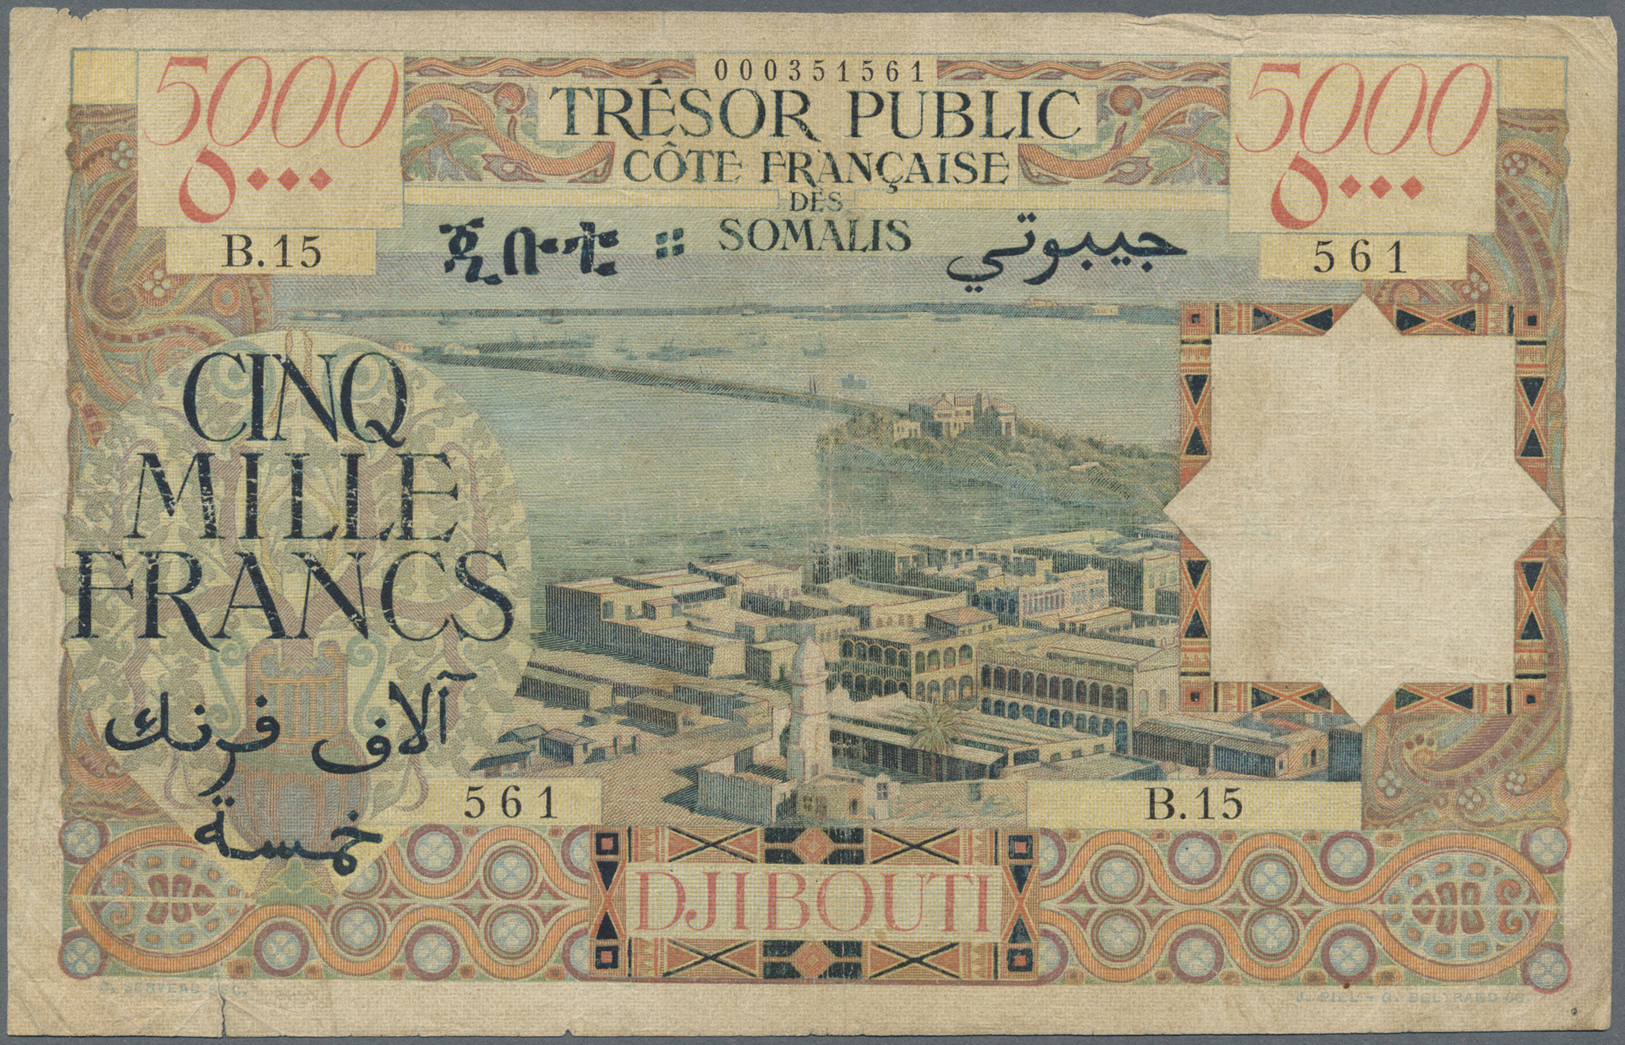 00861 French Somaliland / Französisch Somaliland: 5000 Francs 1952 "Tresor Public Cote Francaise Des Somalis" P. 29, Key - Other - Africa